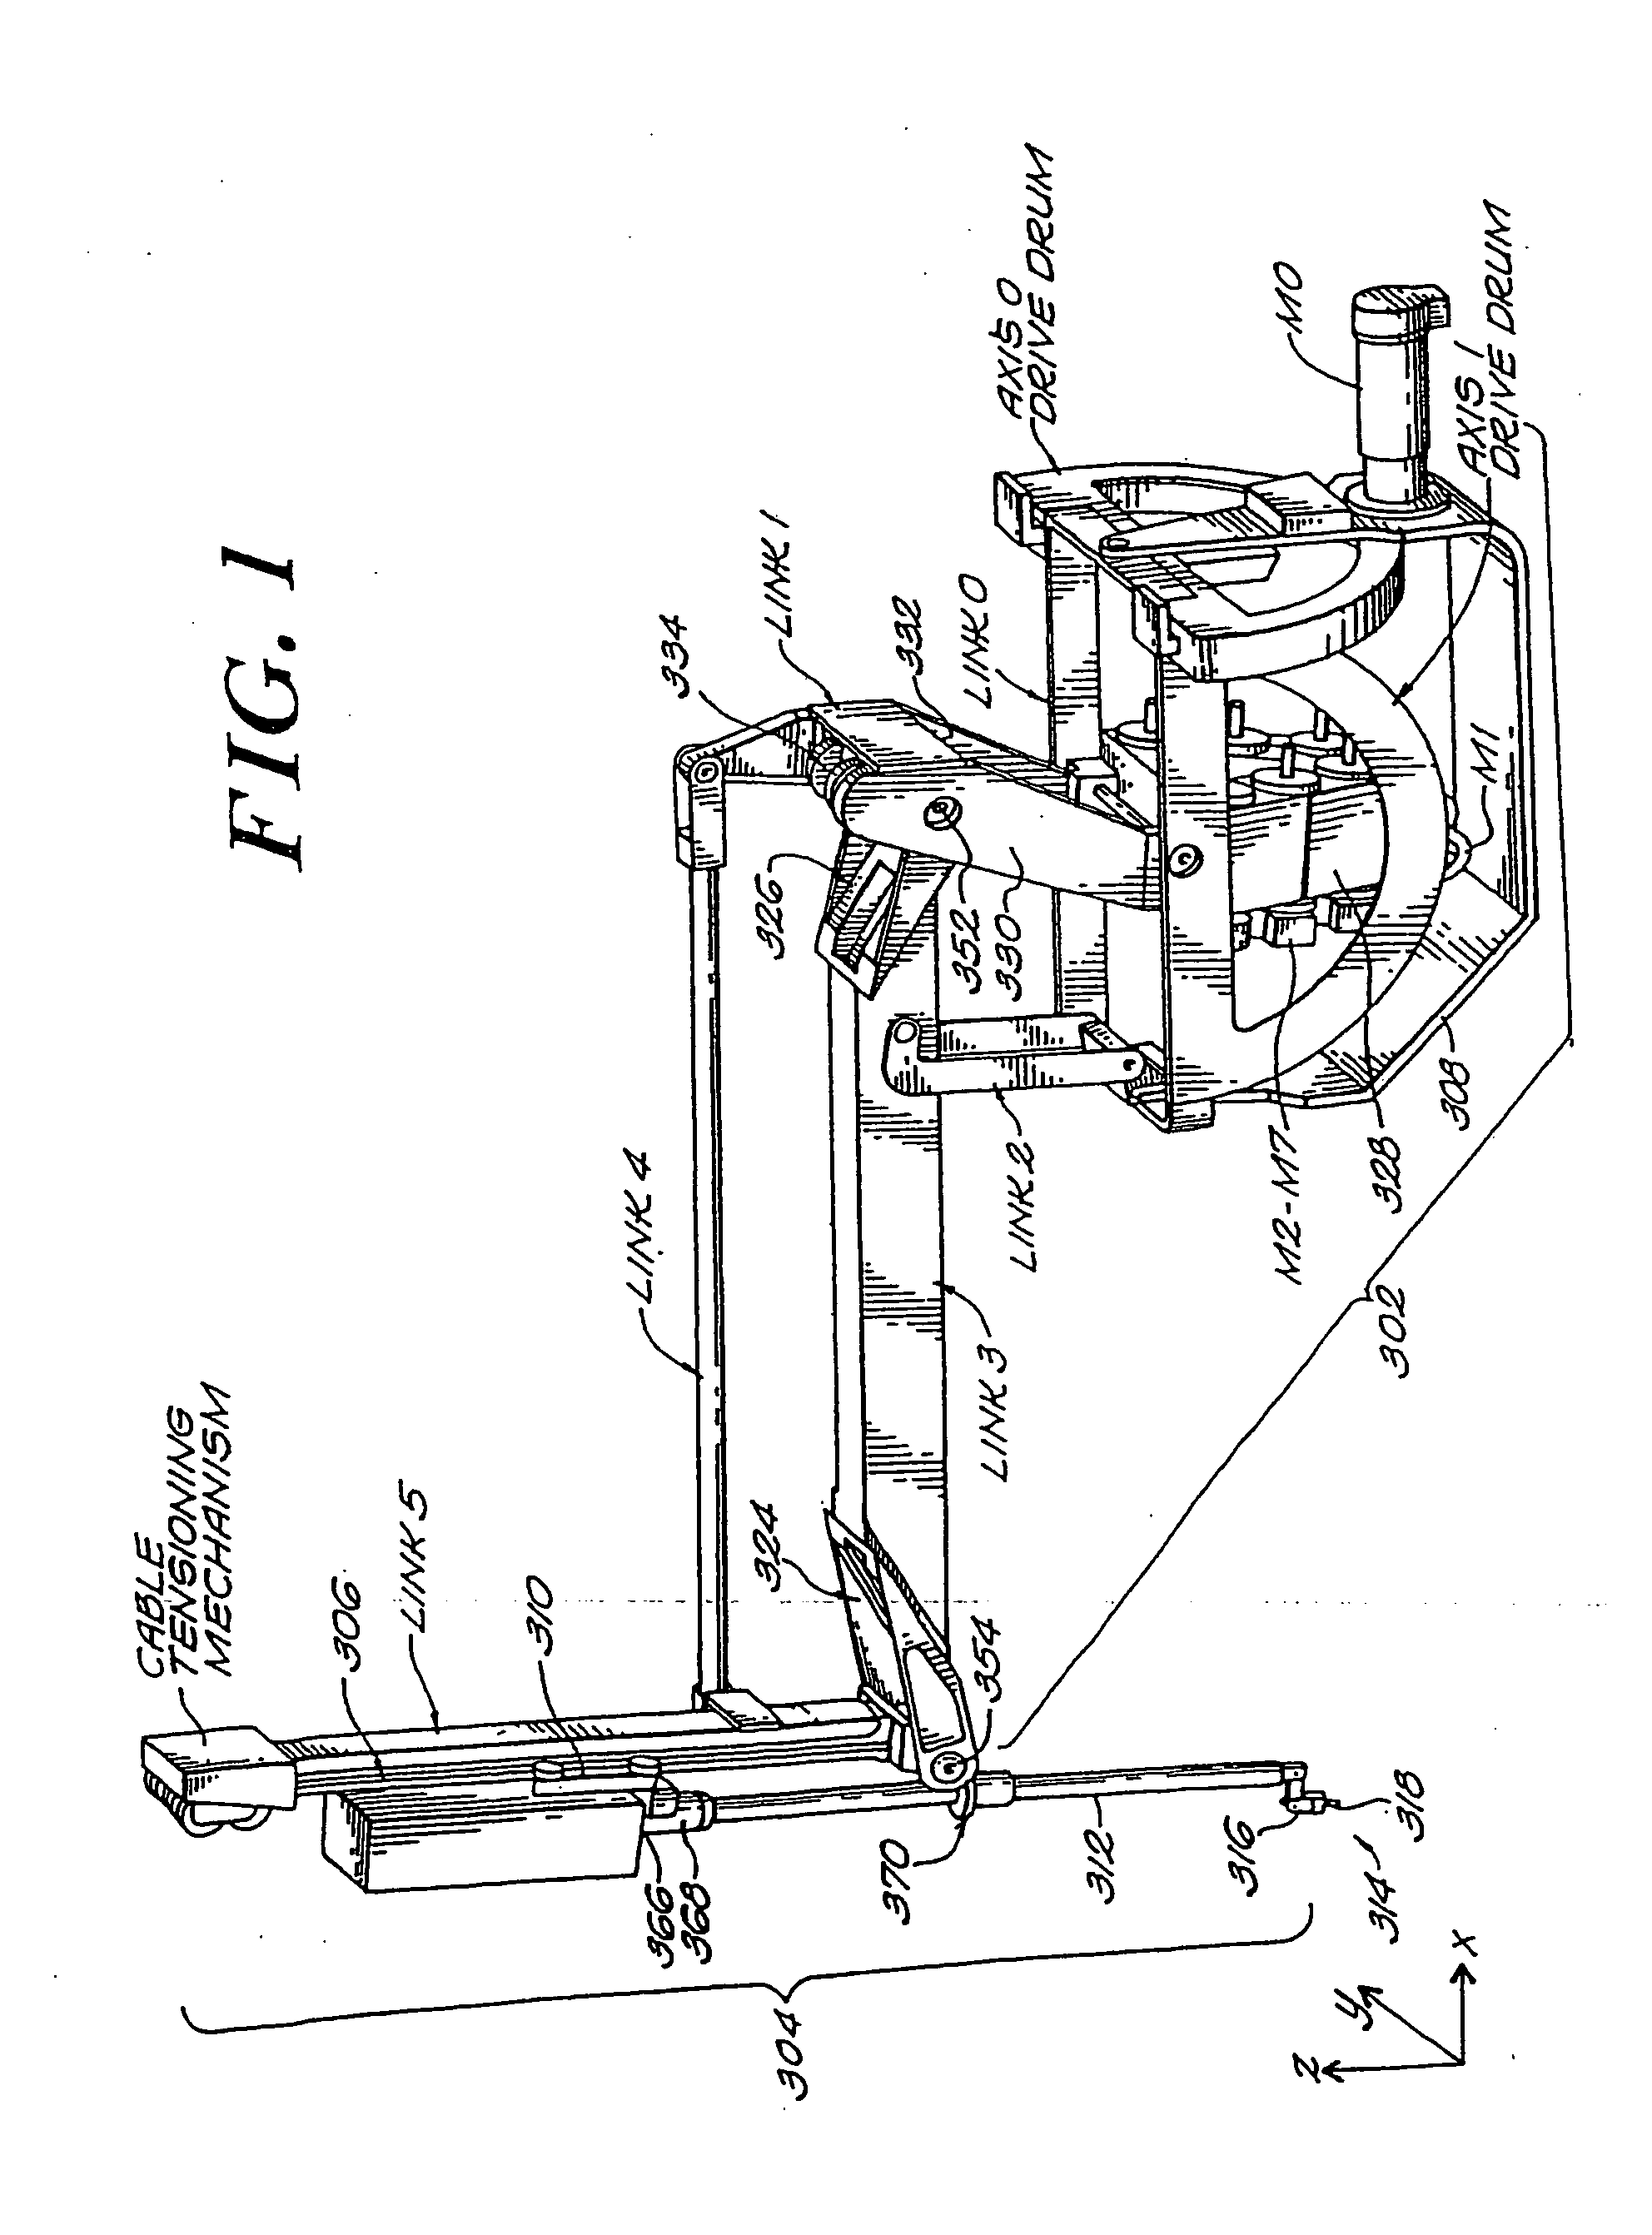 Robotic apparatus